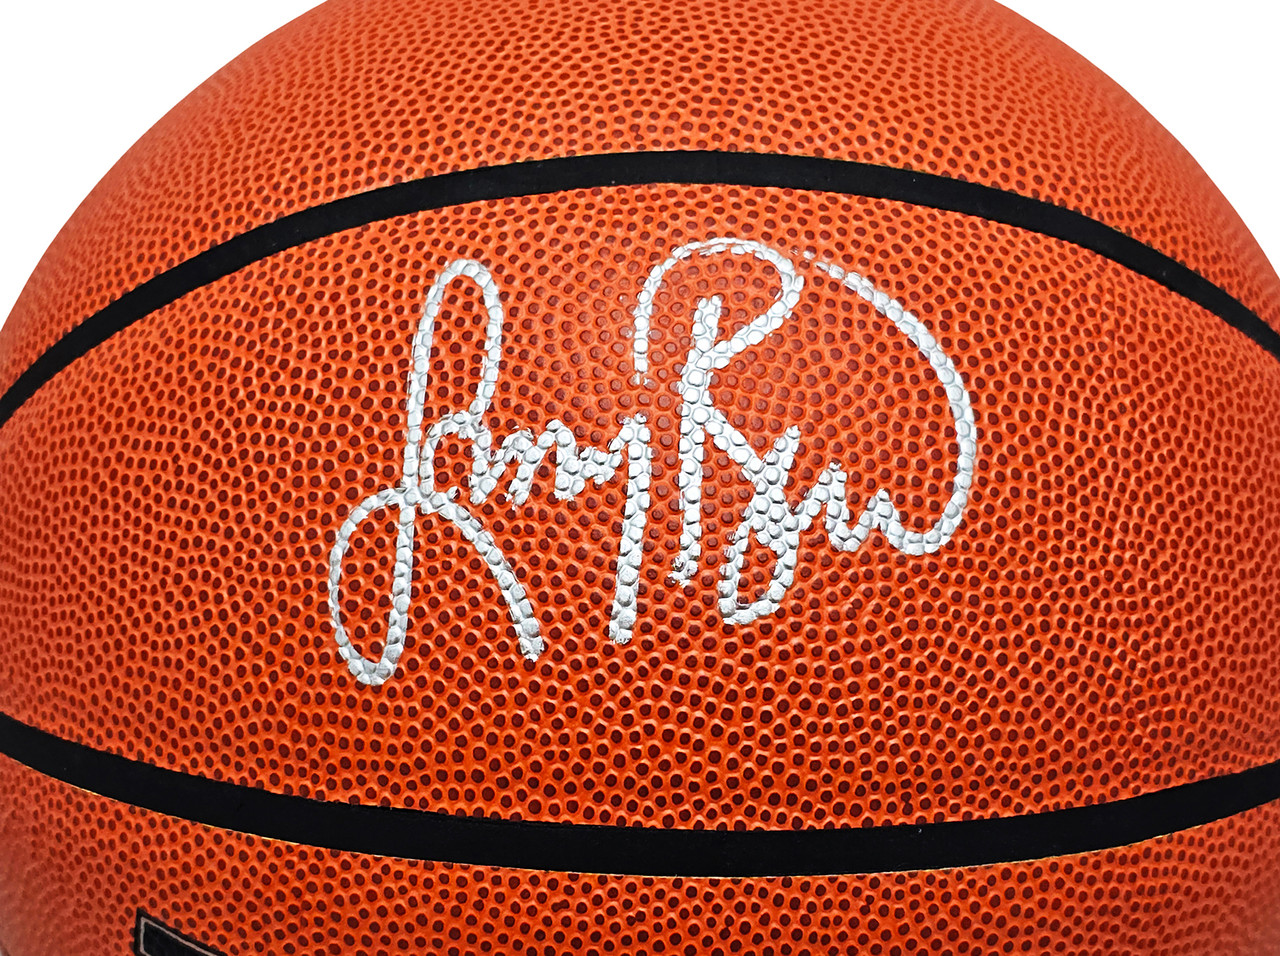 Larry Bird Boston Celtic Autographed Indoor/Outdoor Basketball